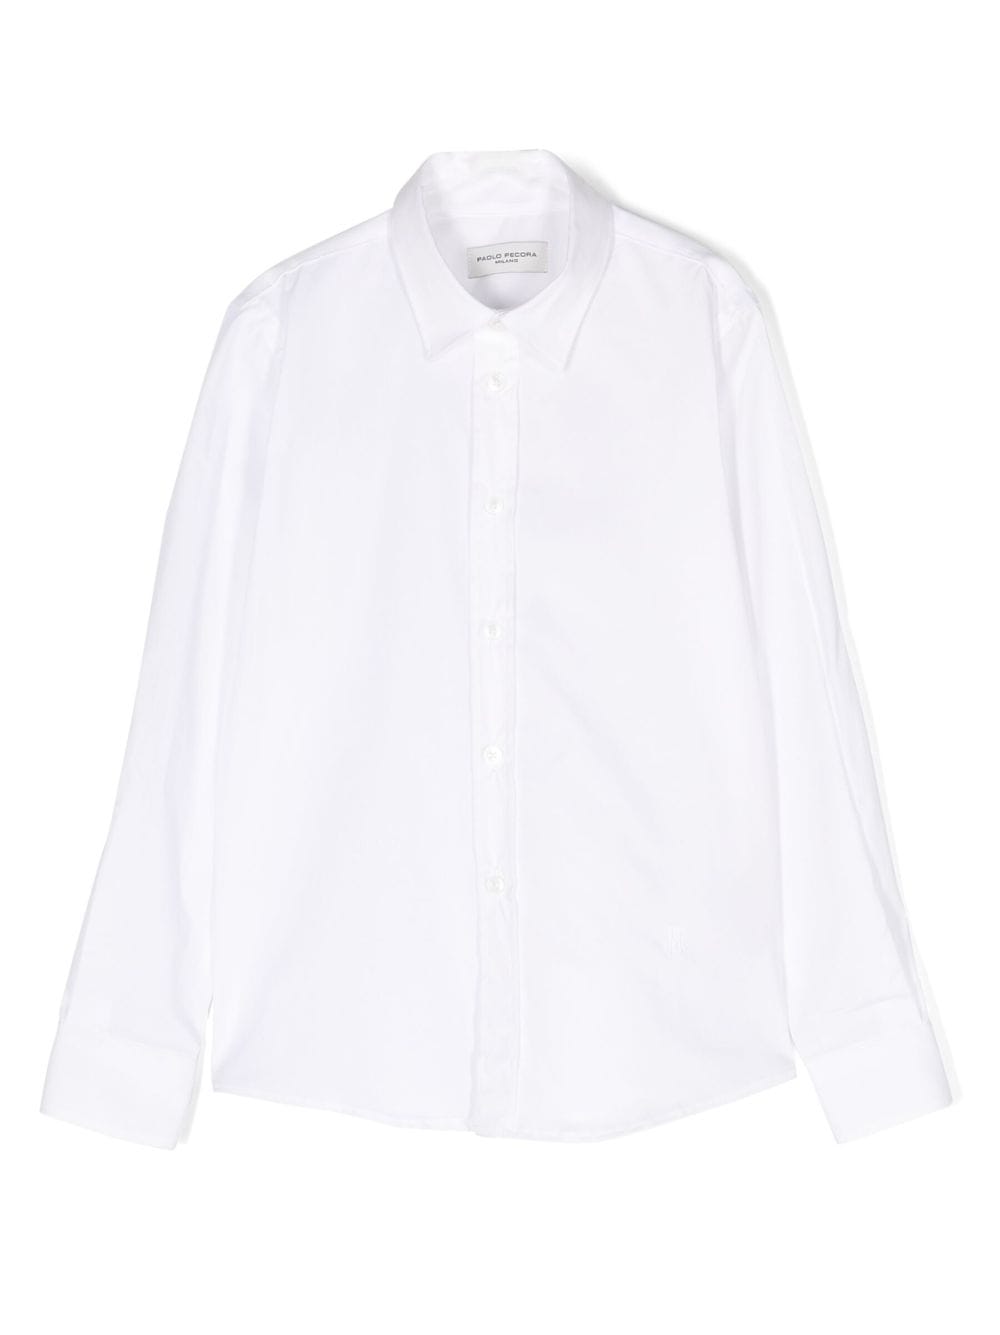 Paolo Pecora Kids long-sleeve button-up shirt - White von Paolo Pecora Kids